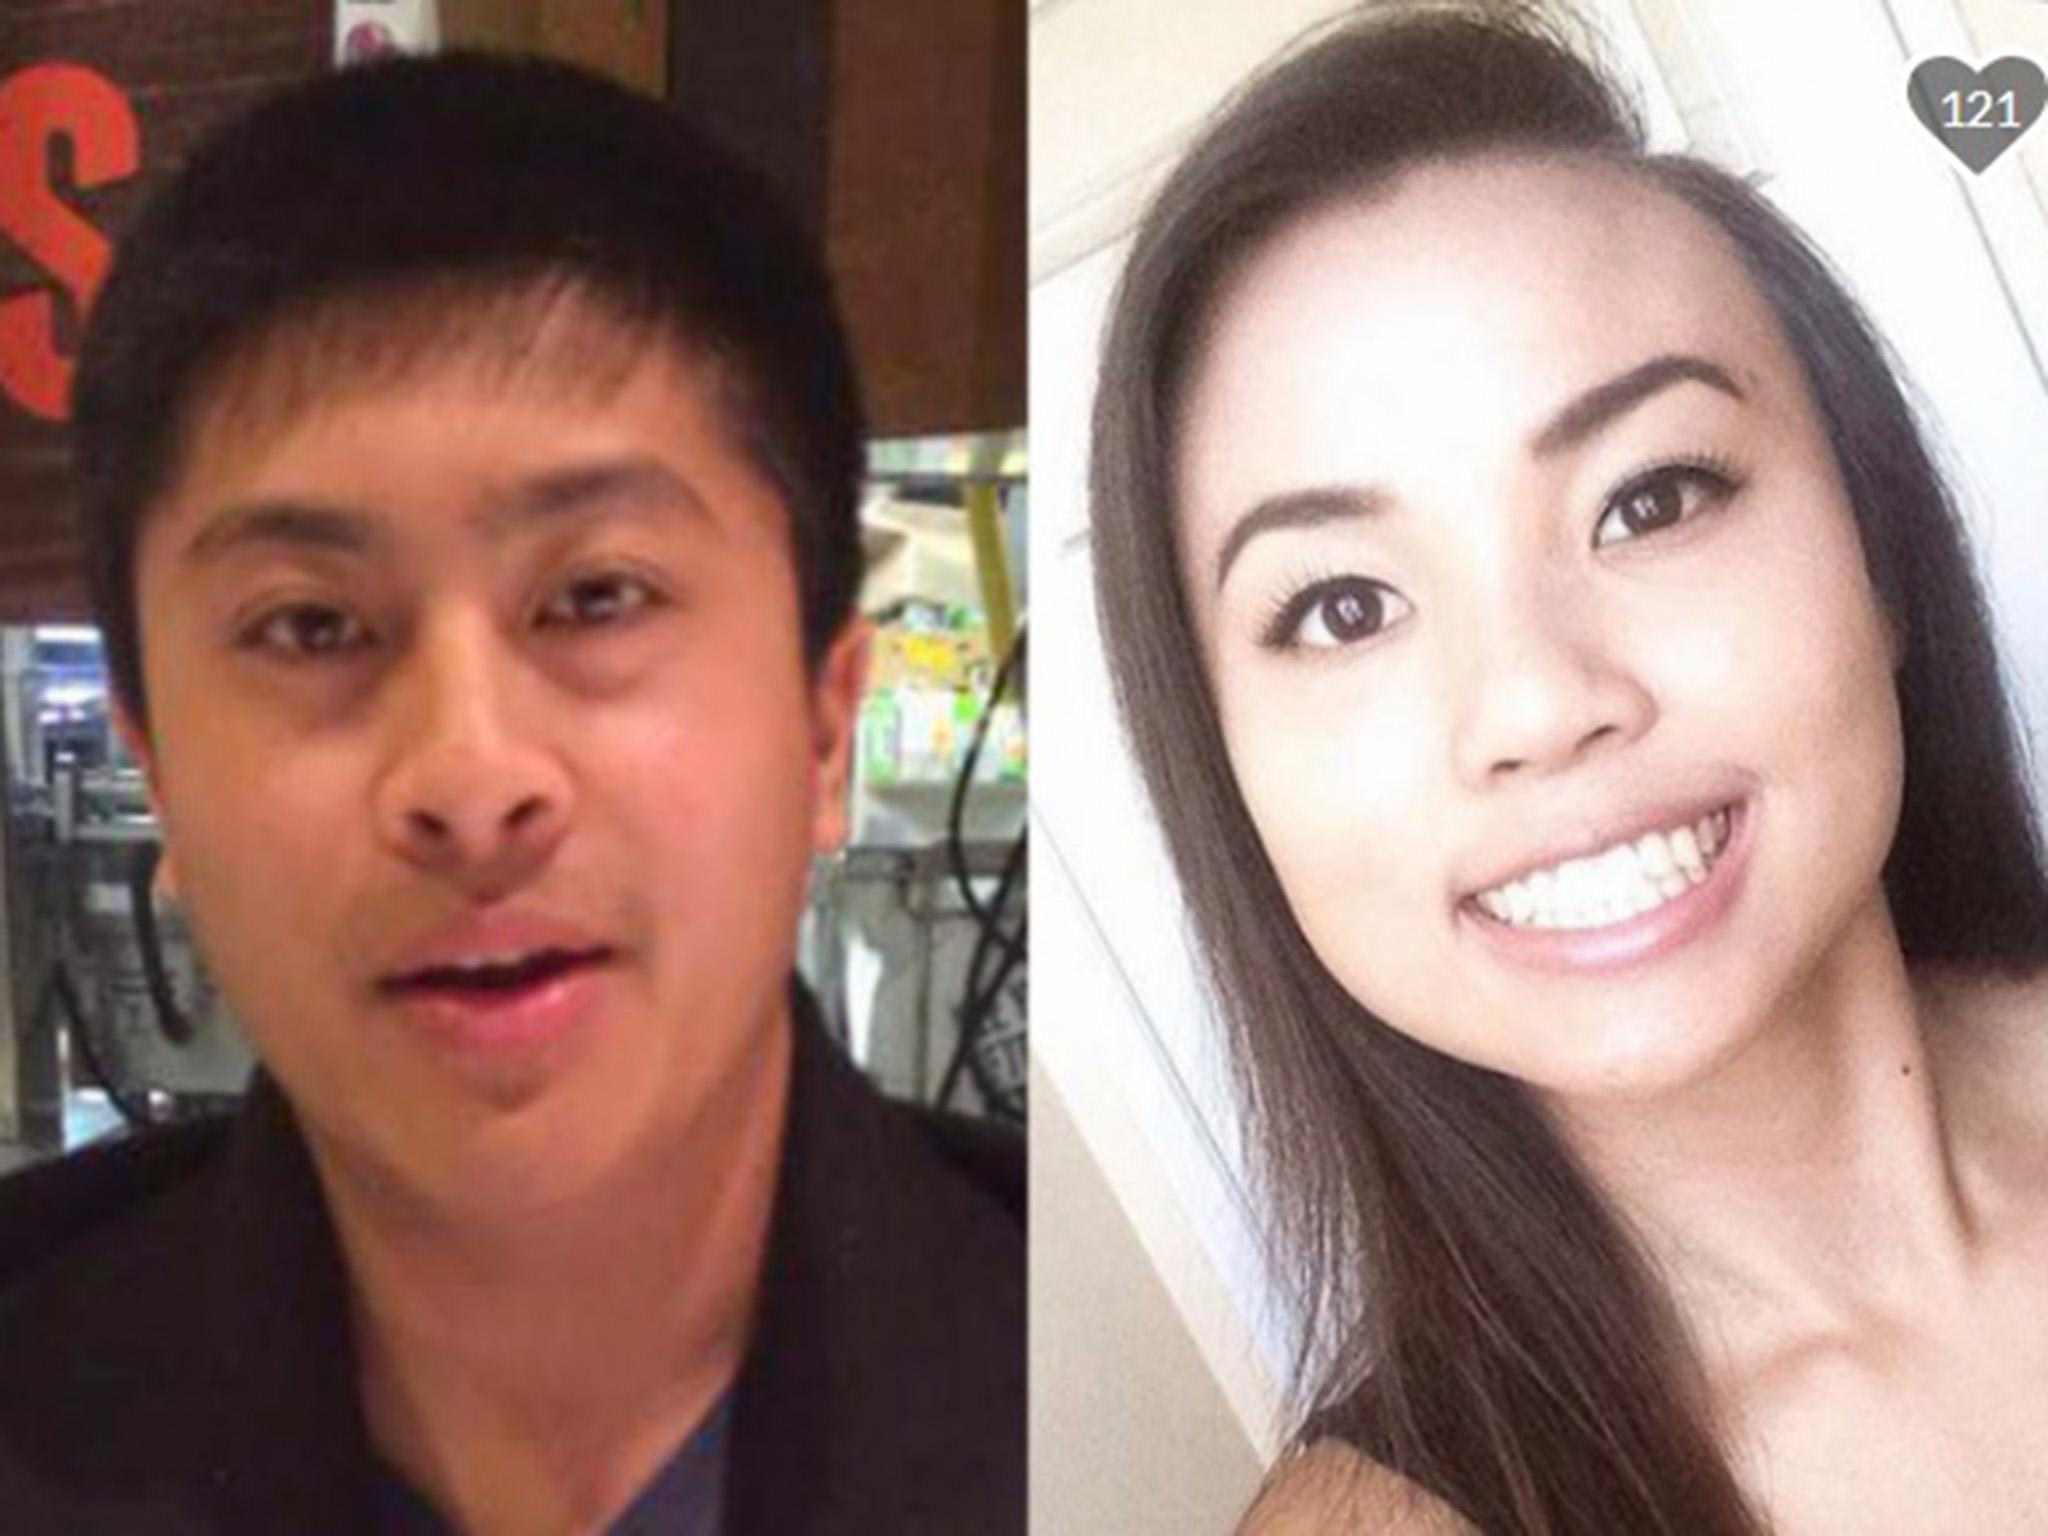 Joseph Orsebo and Rachel Nguyen were found locked in an embrace